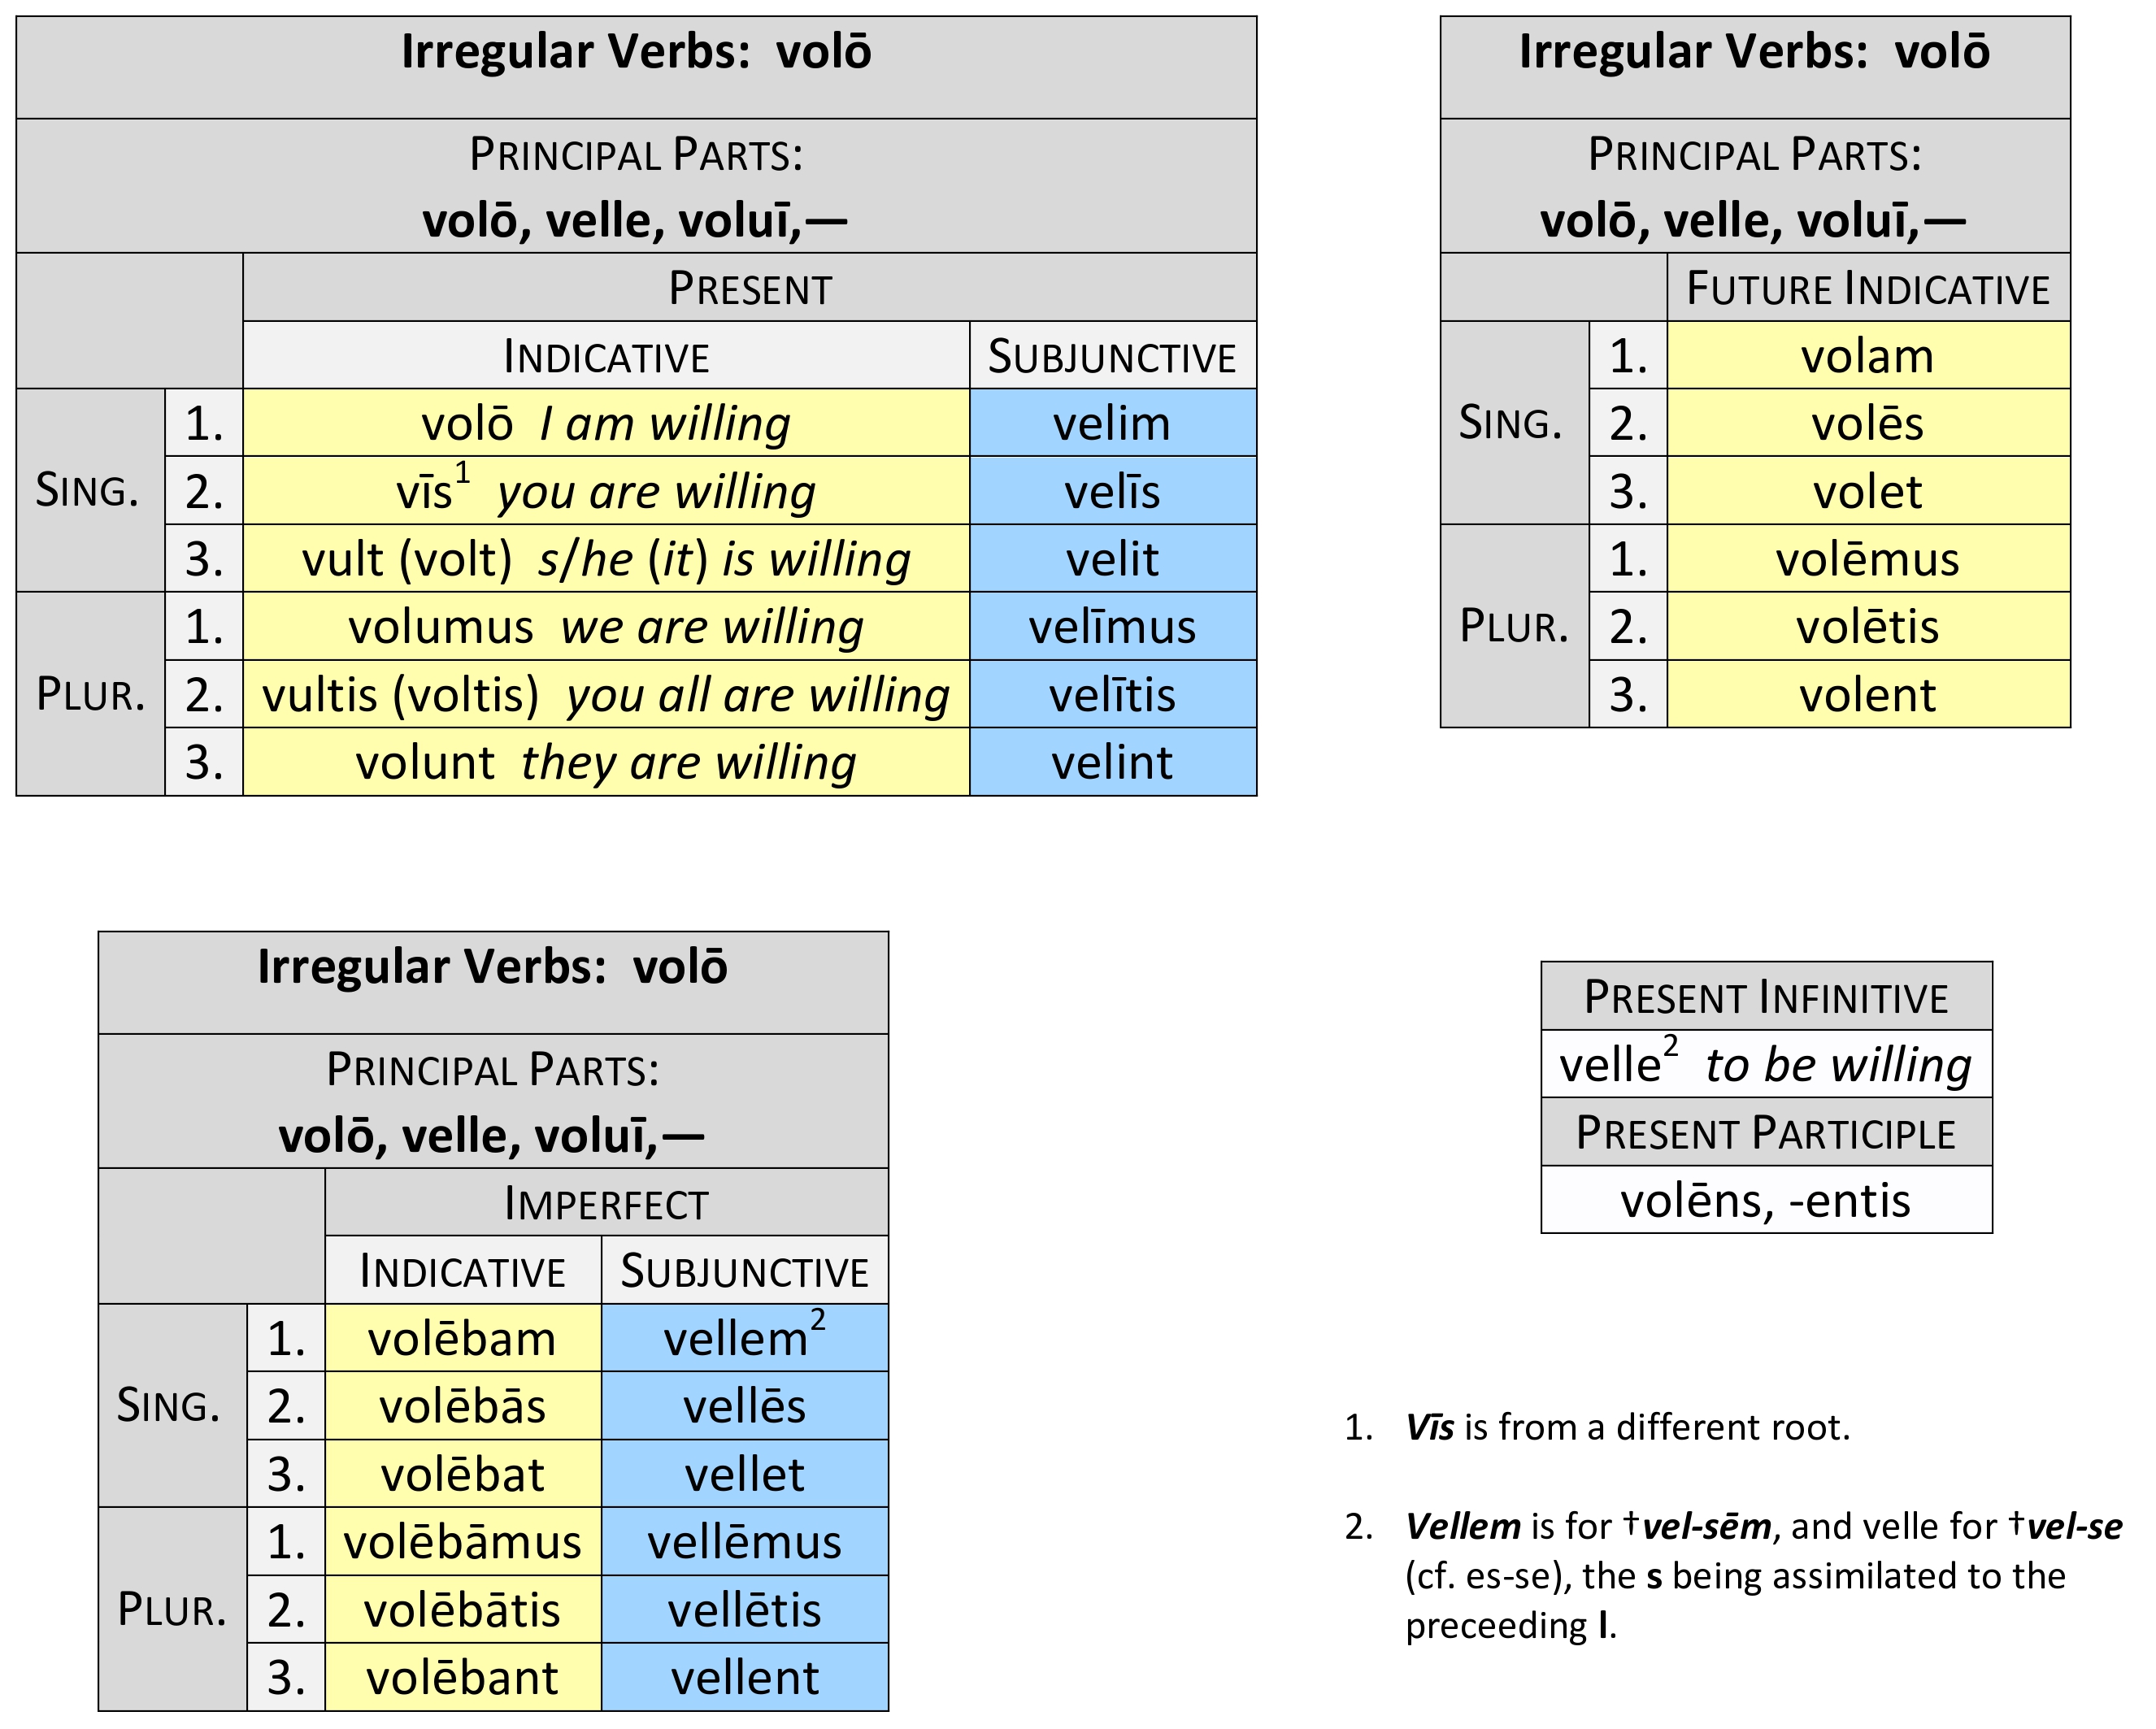 irregular verb volō present system synopsis